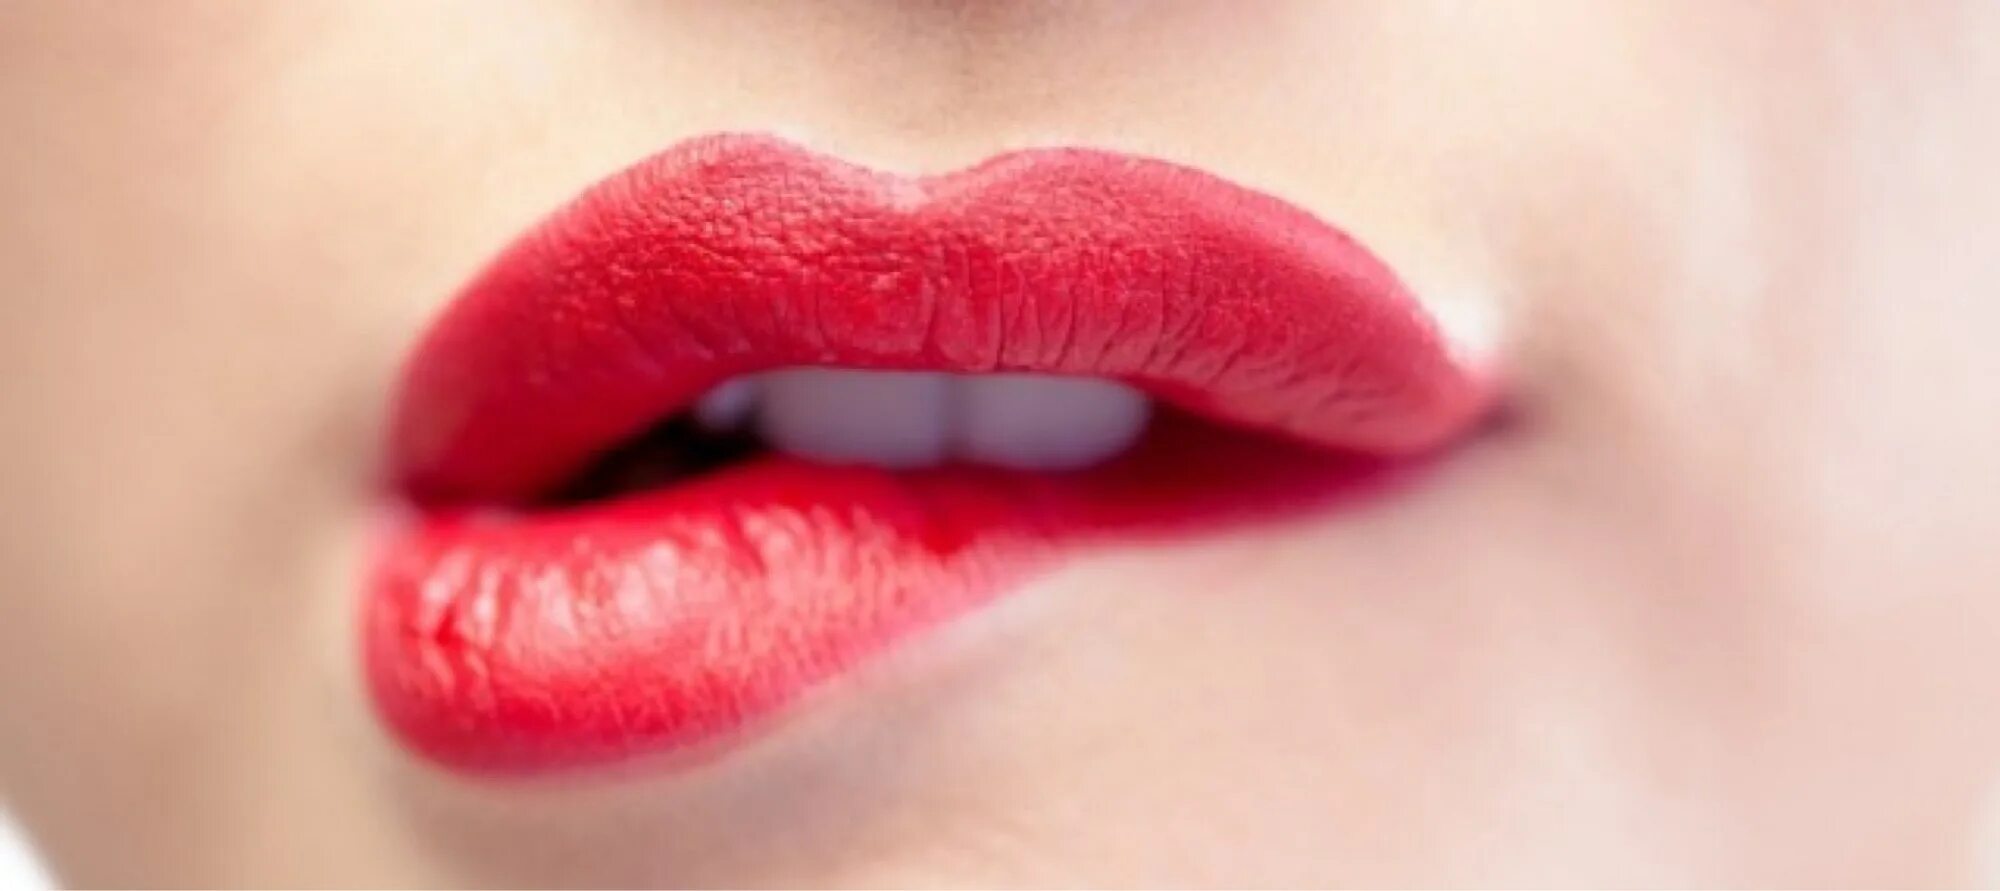 Lip biting. Красивые губы. Женские губы. Красивые сочные губы. Красивые женские губы.